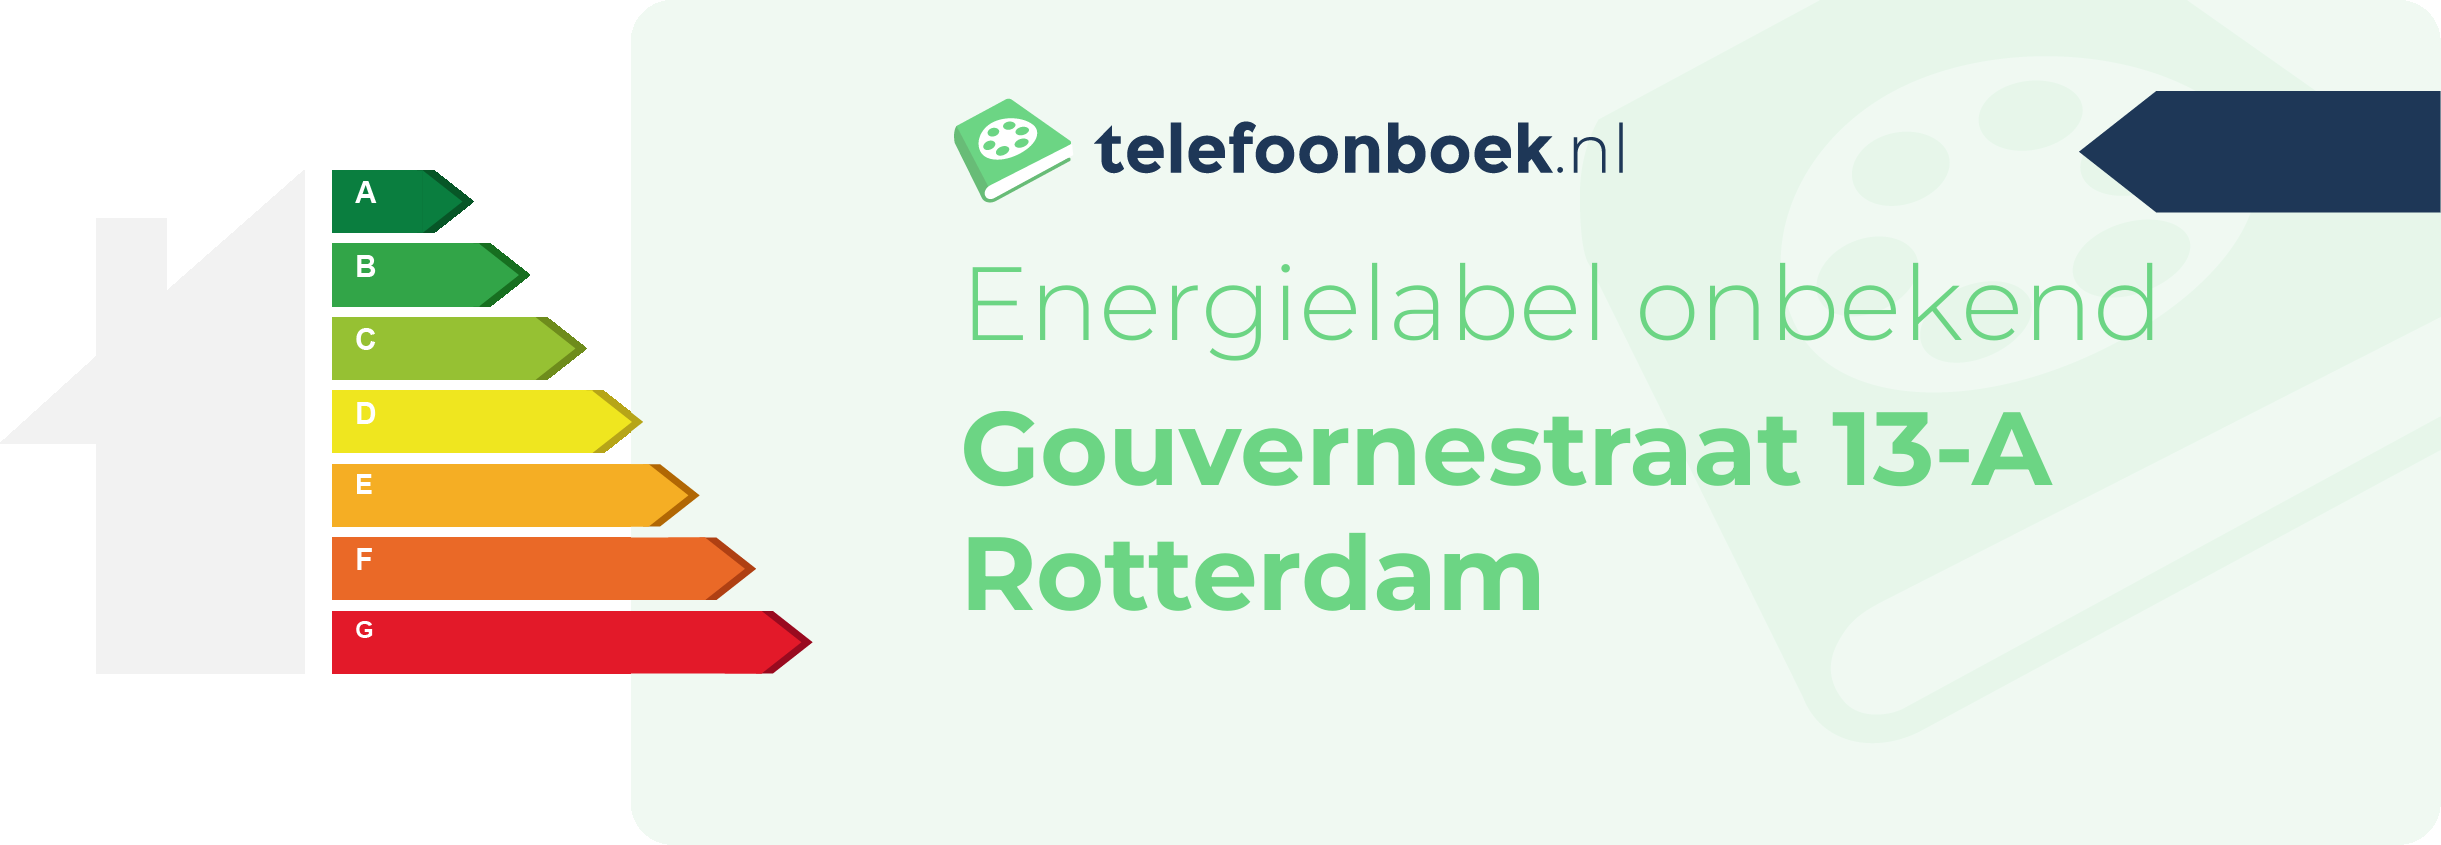 Energielabel Gouvernestraat 13-A Rotterdam